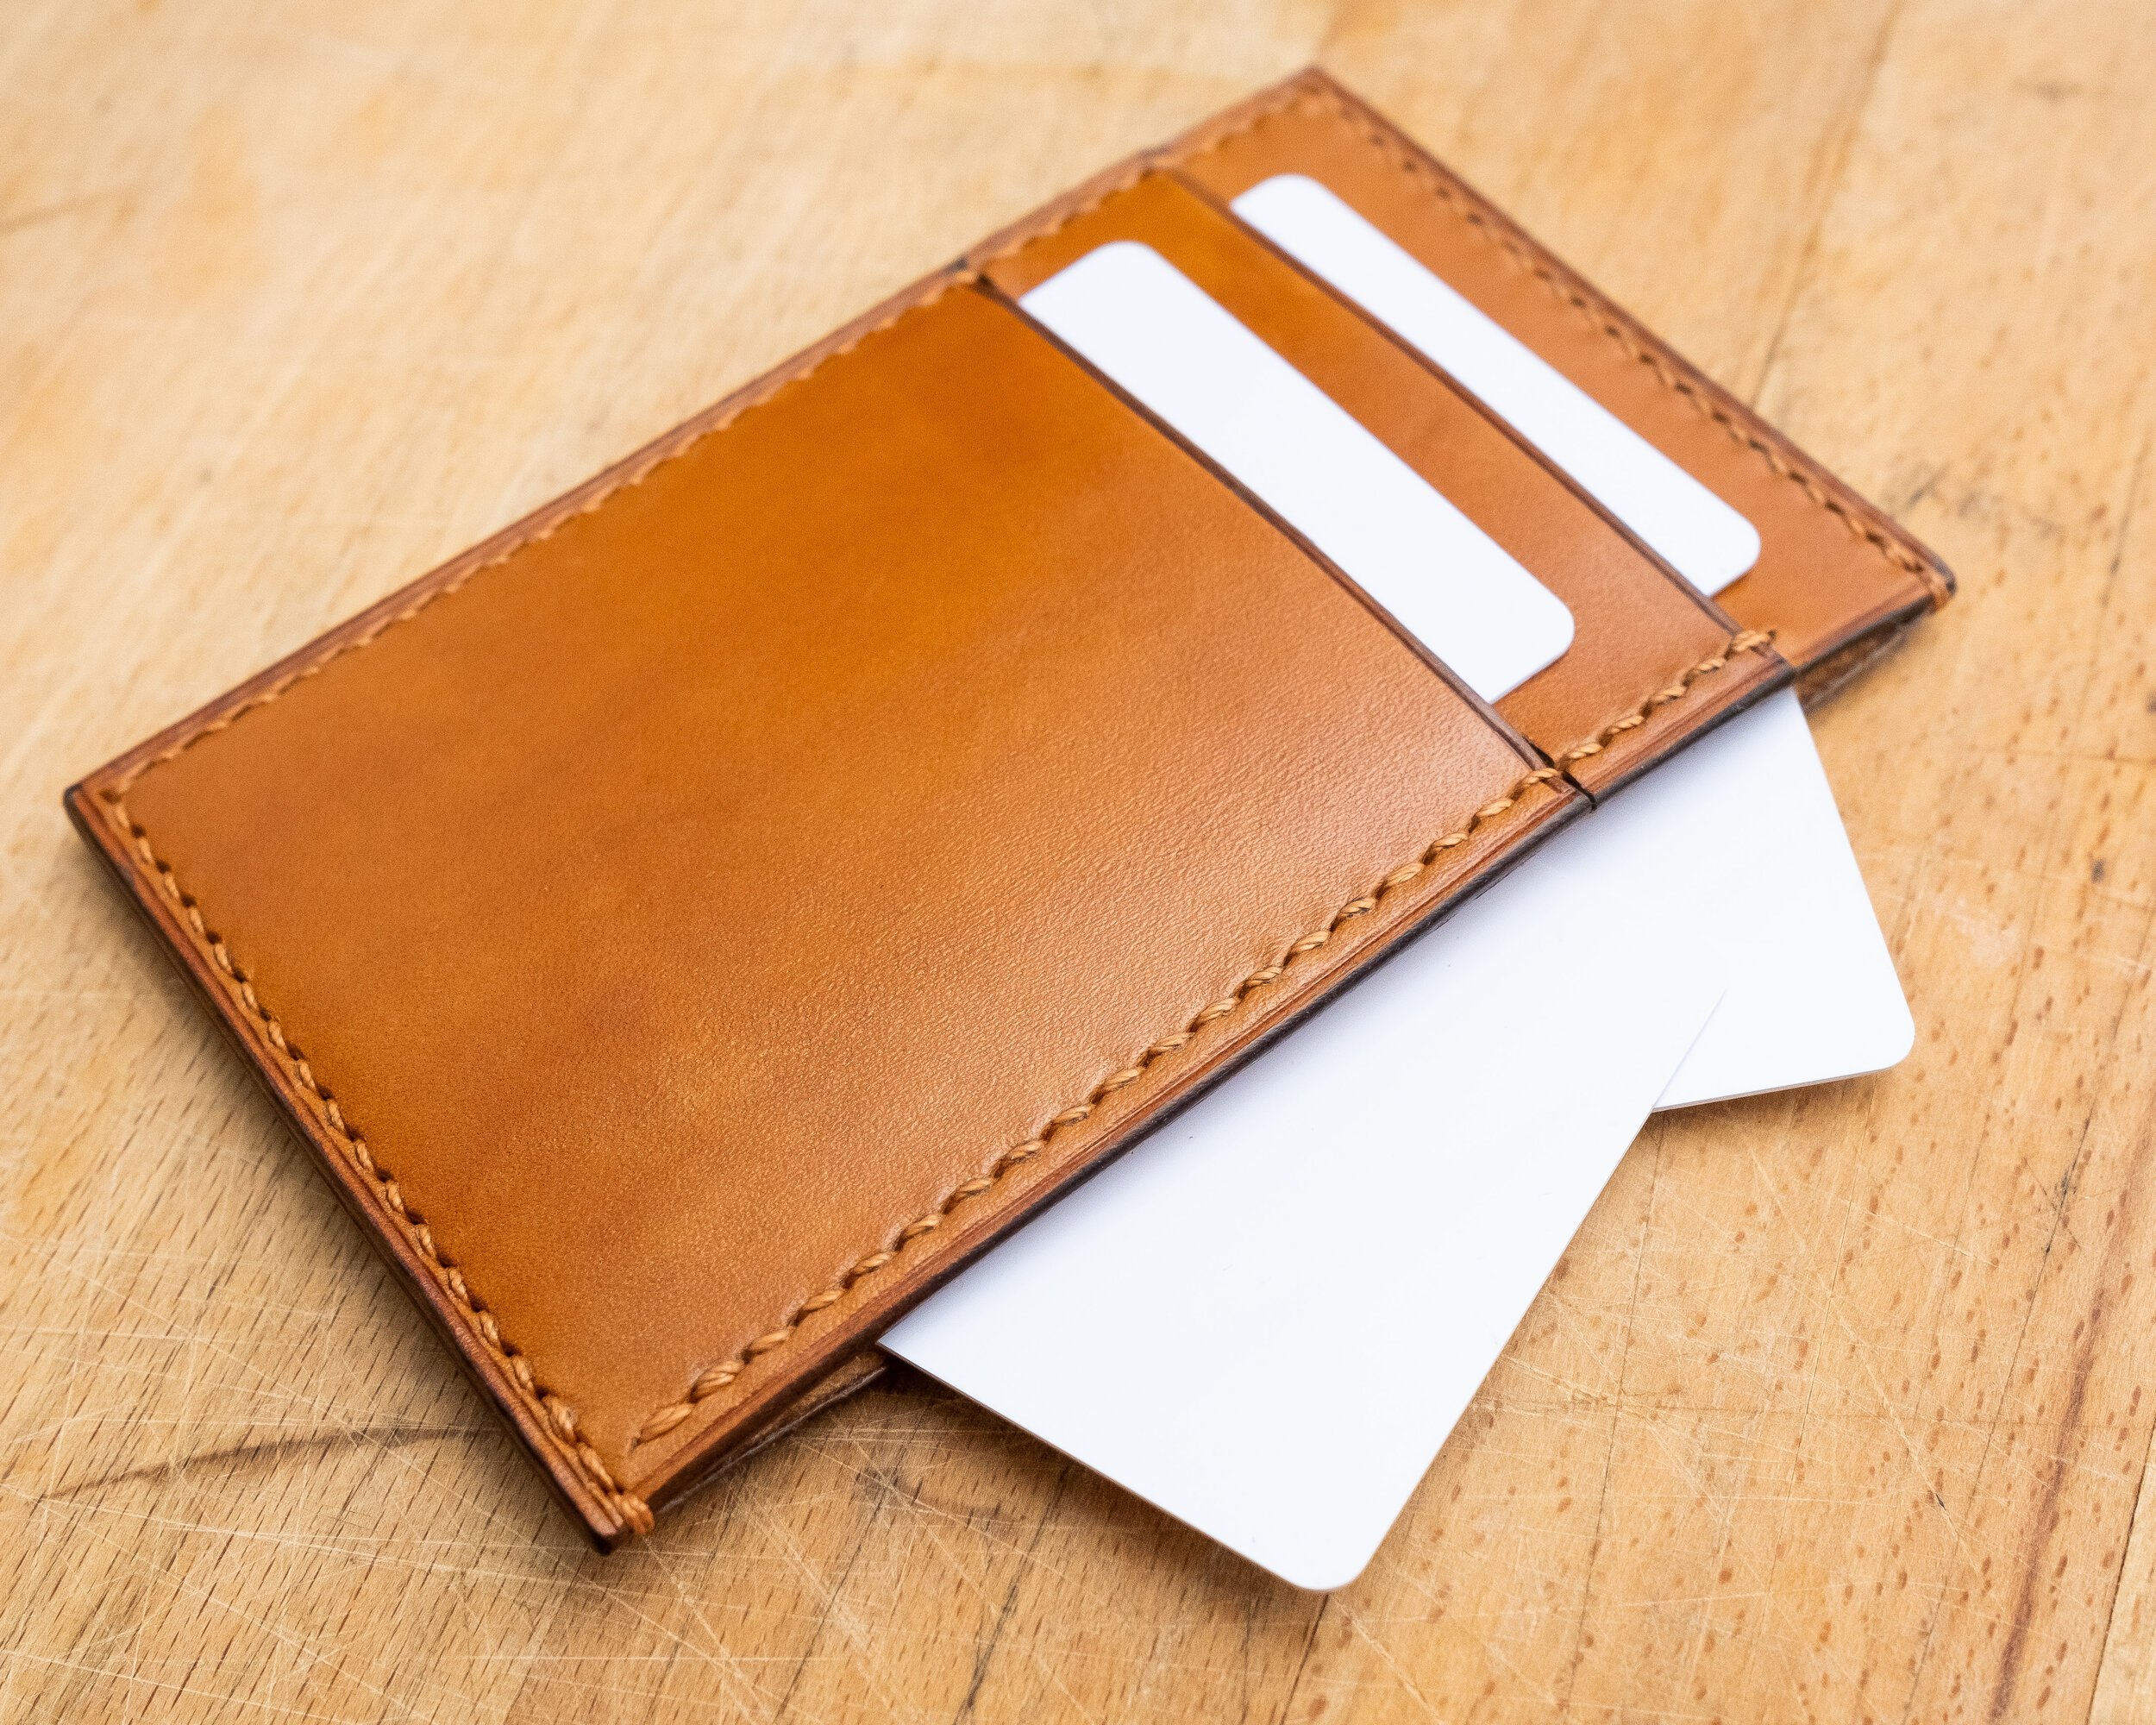 Credit Card Holder Tutorial ~ DIY Tutorial Ideas!